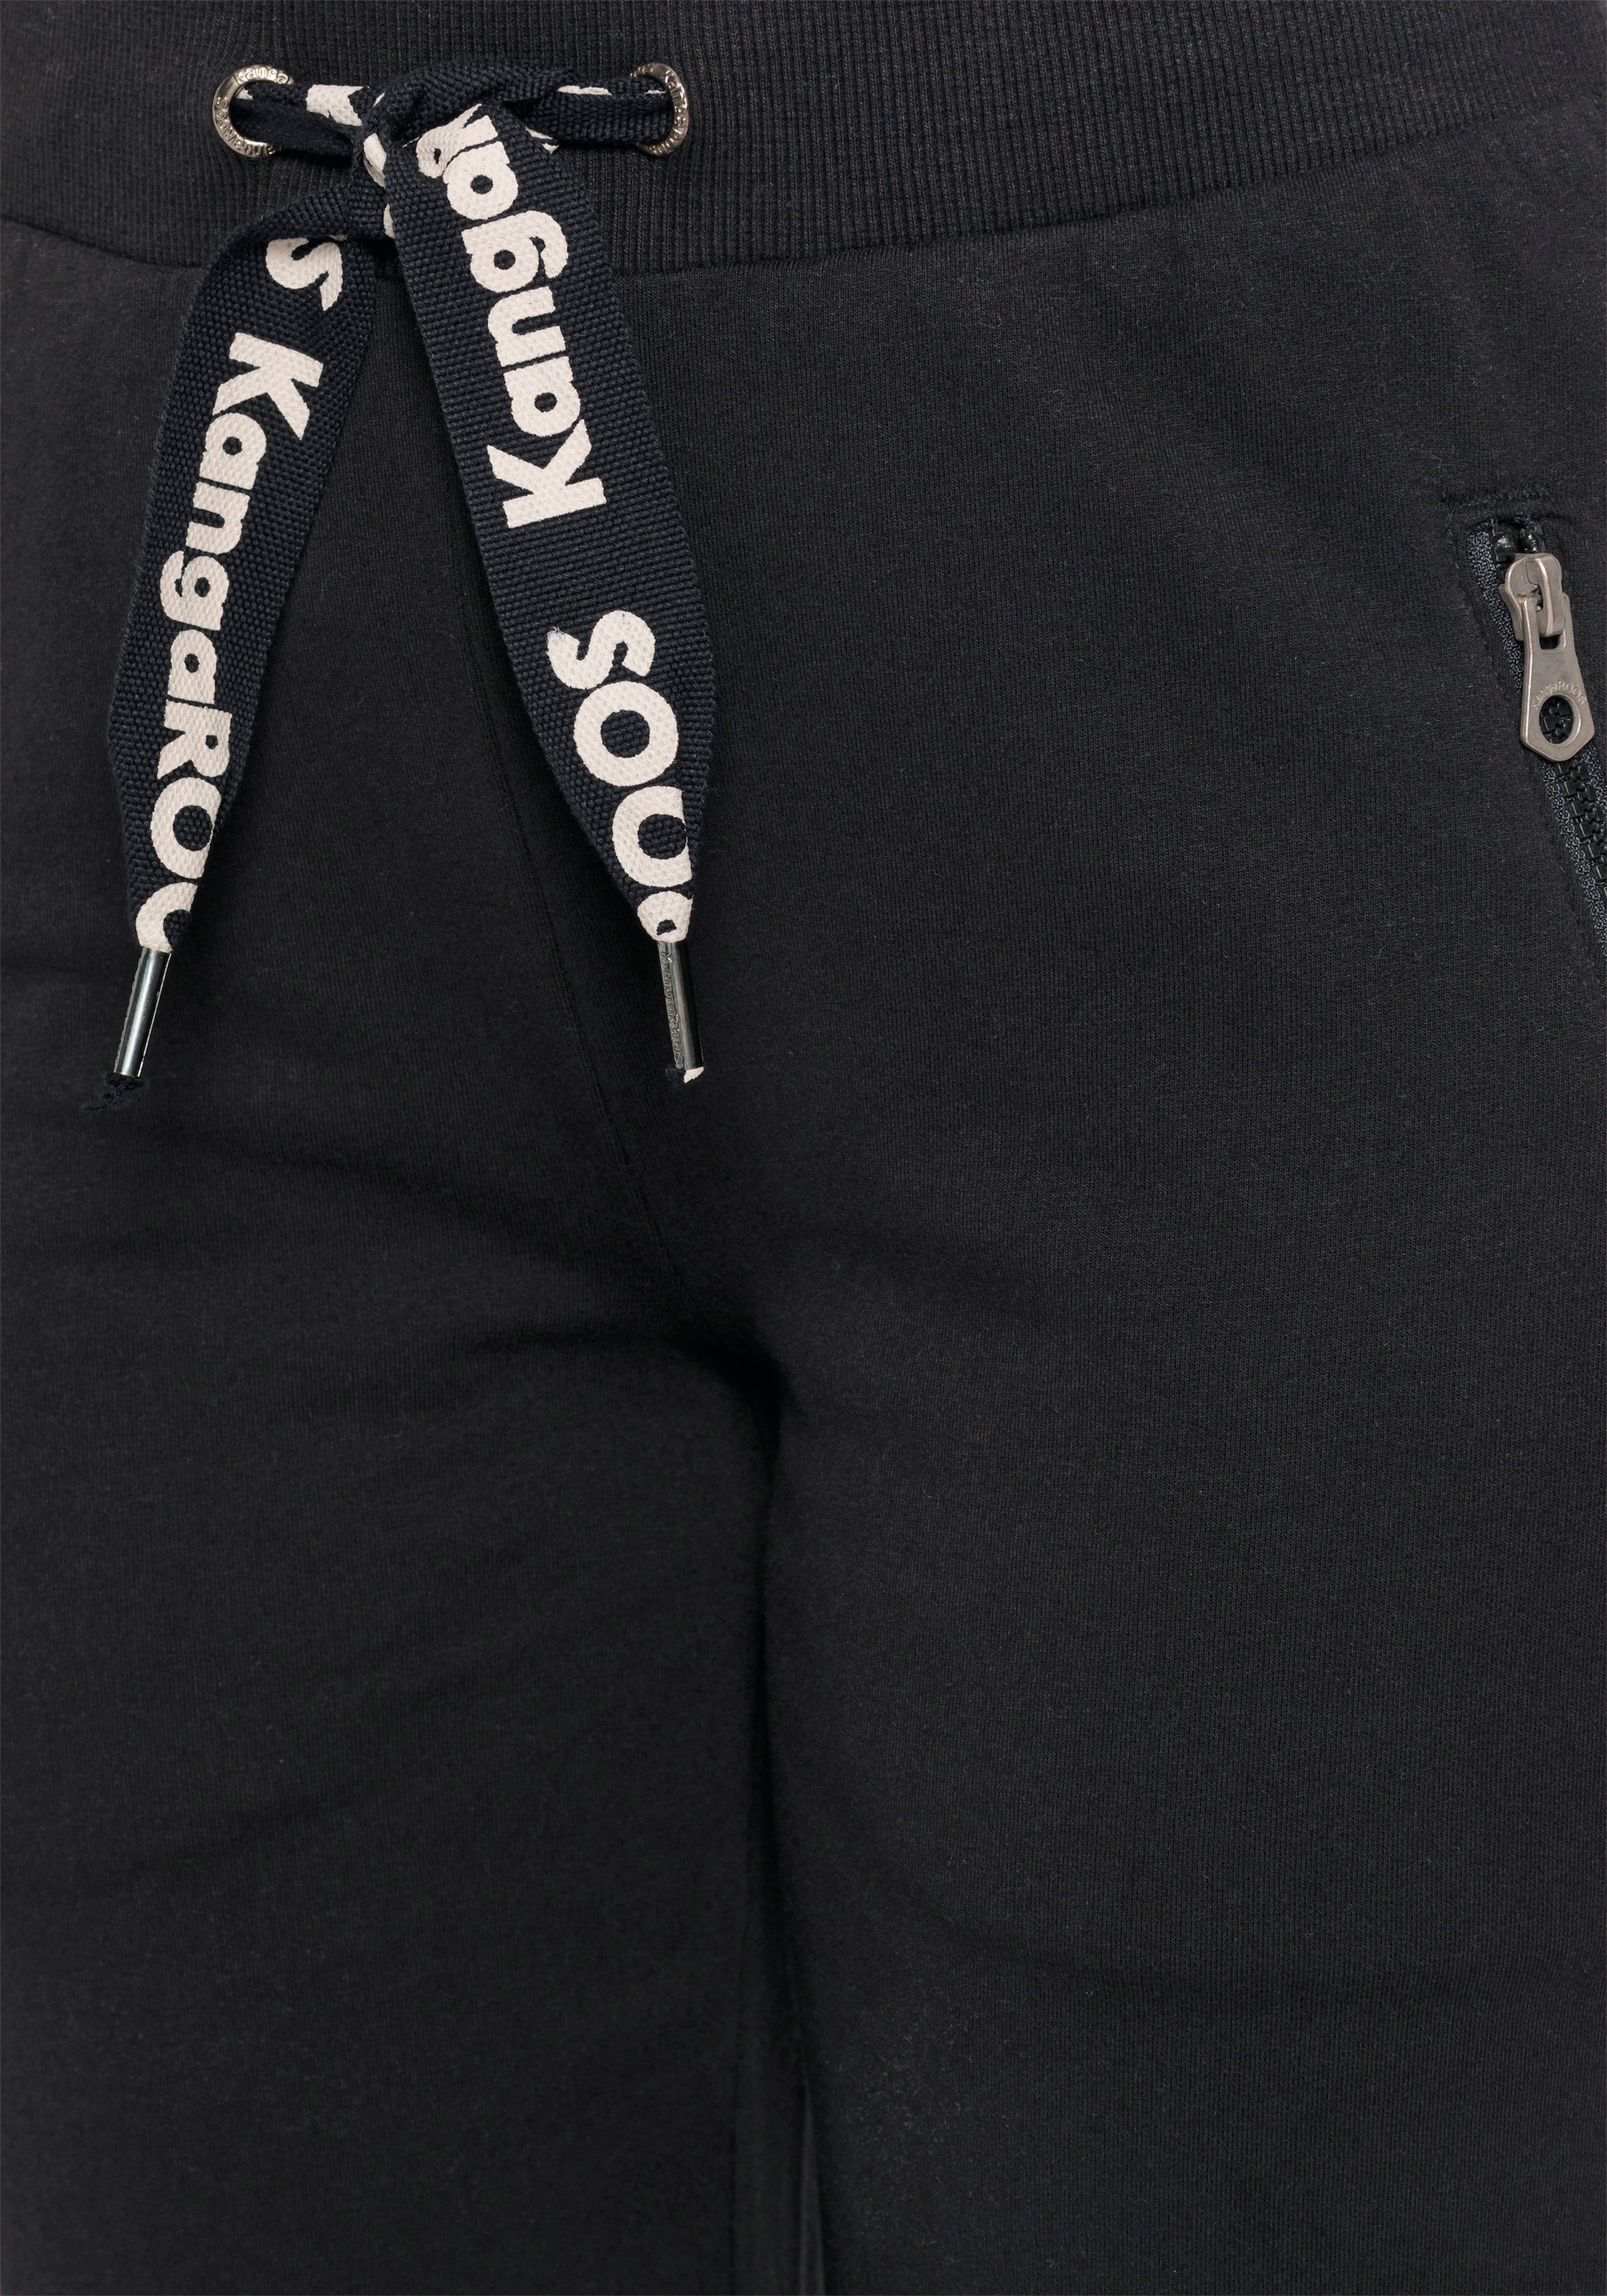 Sweatpants KangaROOS und Zippertaschen KOLLEKTION Pants, Jogger Logo mit bestellen -NEUE Jetzt String